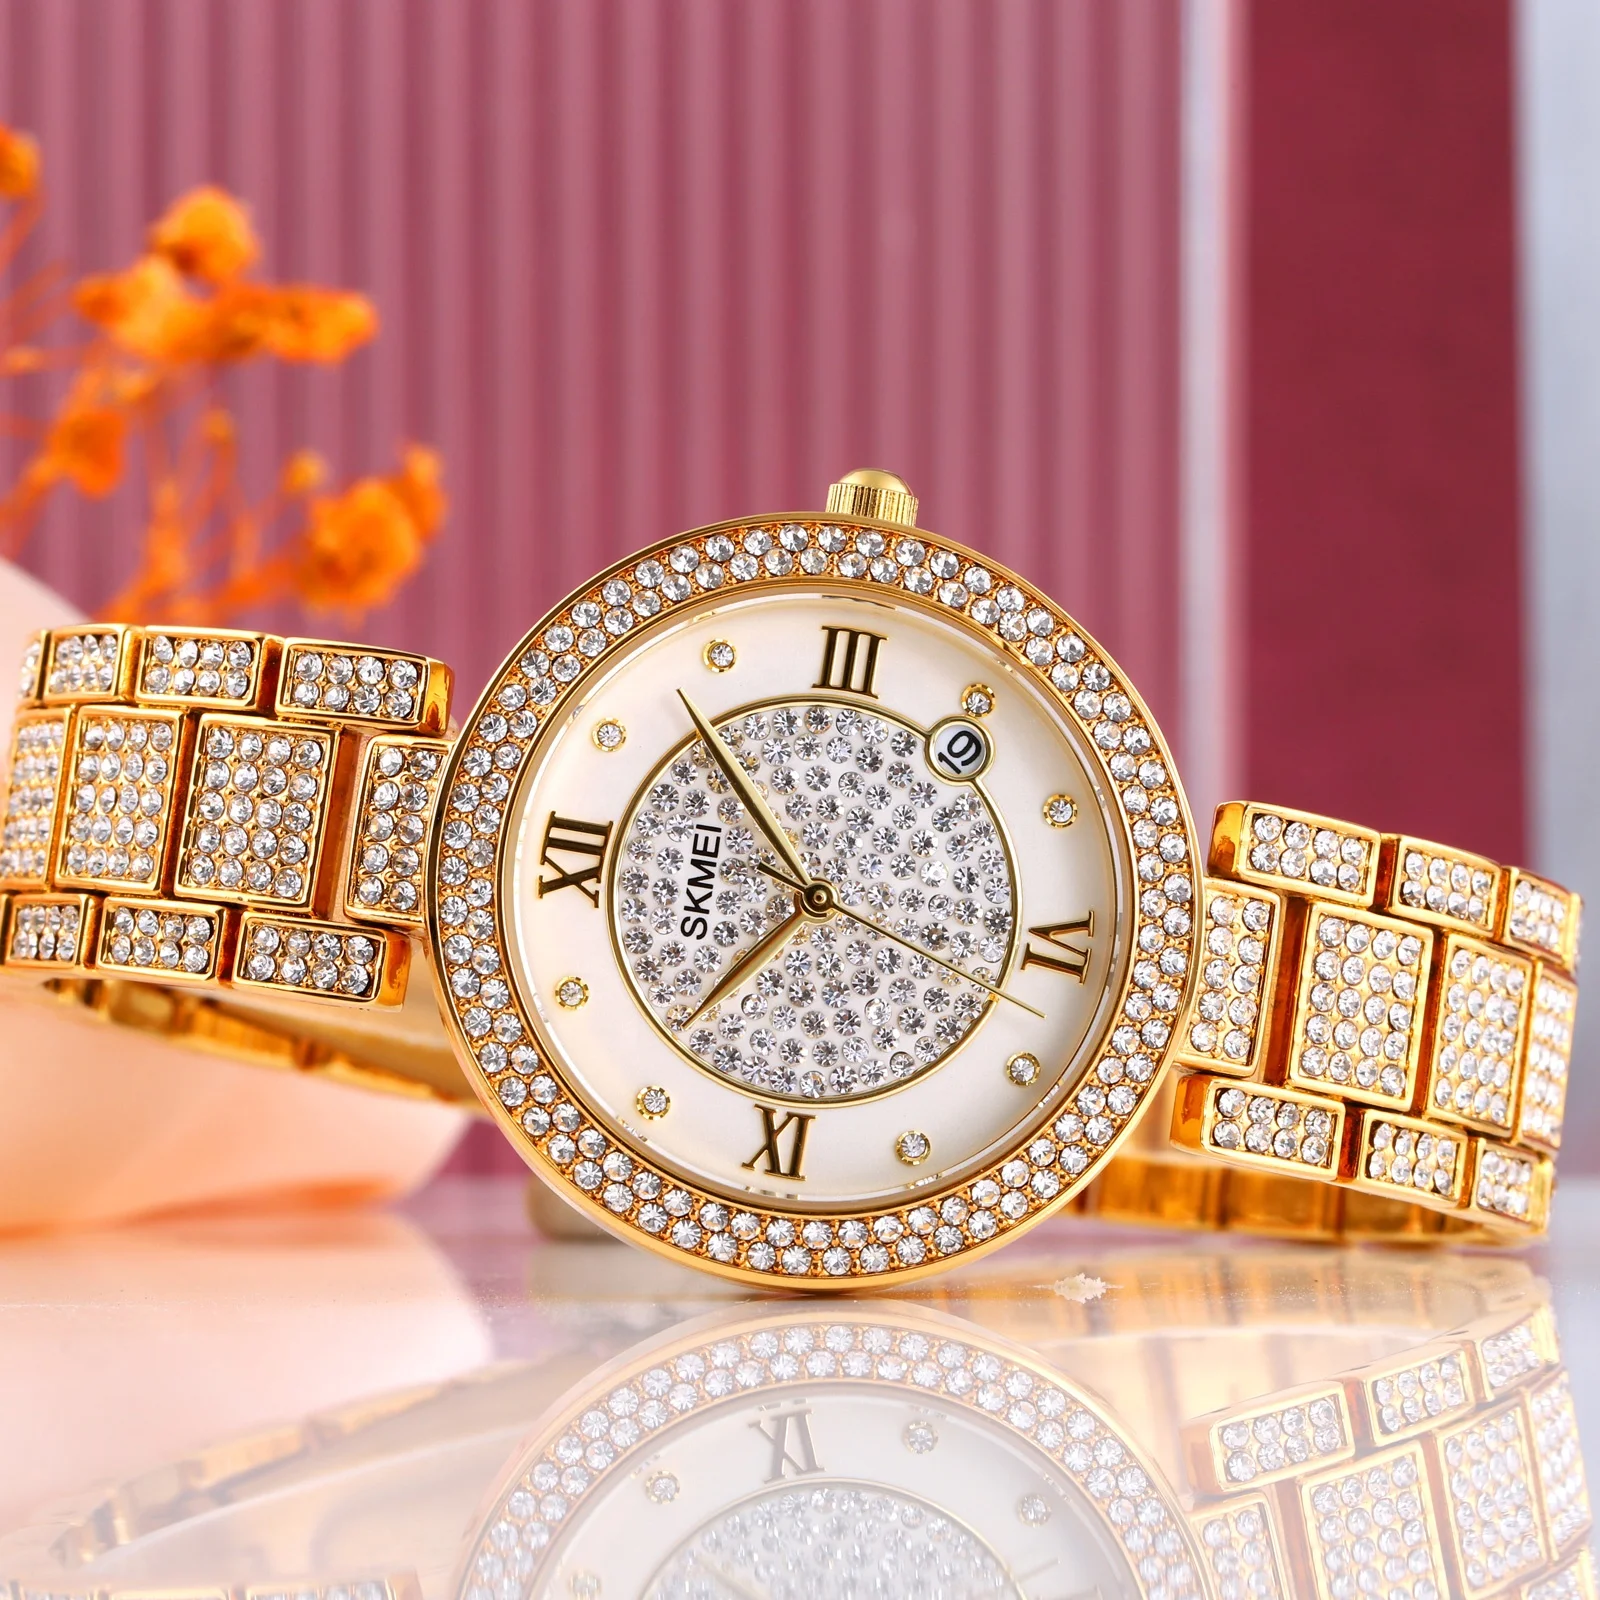 

Skmei 1739 Luxury Modern Fancy Ladies Quartz Waterproof 3ATM Wrist Watches Gold Bling Diamond Watches For Women, Rose gold,silver,gold